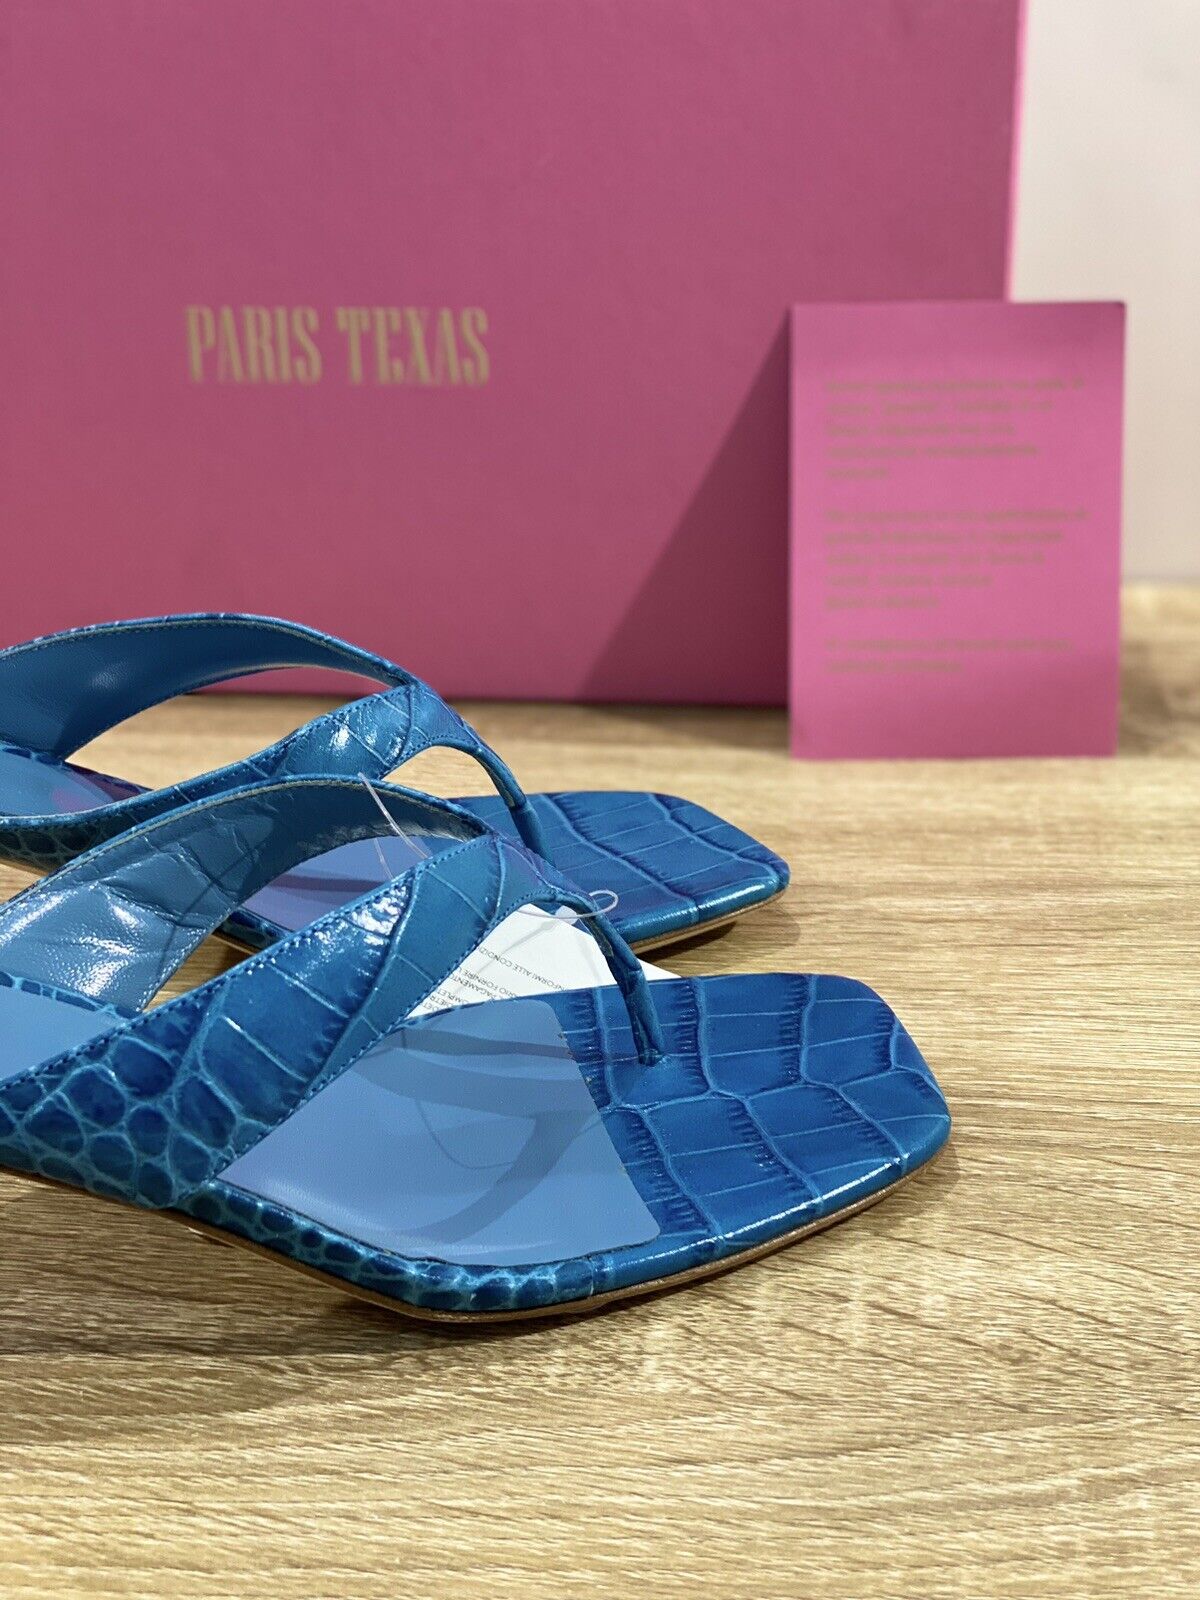 Paris Texas Portofino Thong Sandal Luxury Sandal Paris Texas Donna Pelle 37